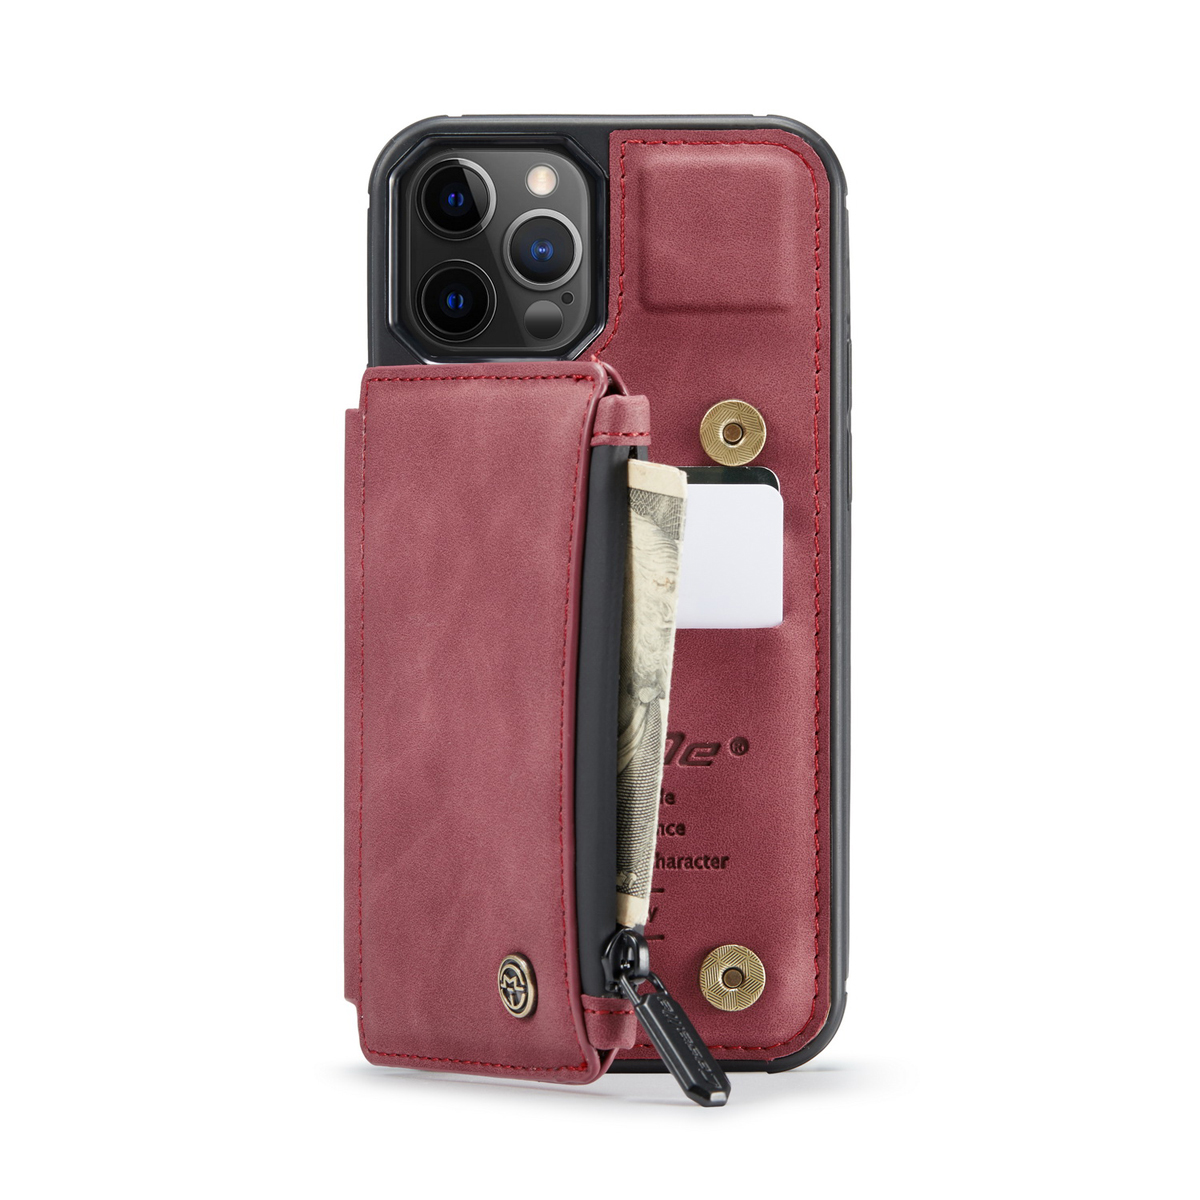 CaseMe C20 Series läderfodral till iPhone 12 Mini, röd